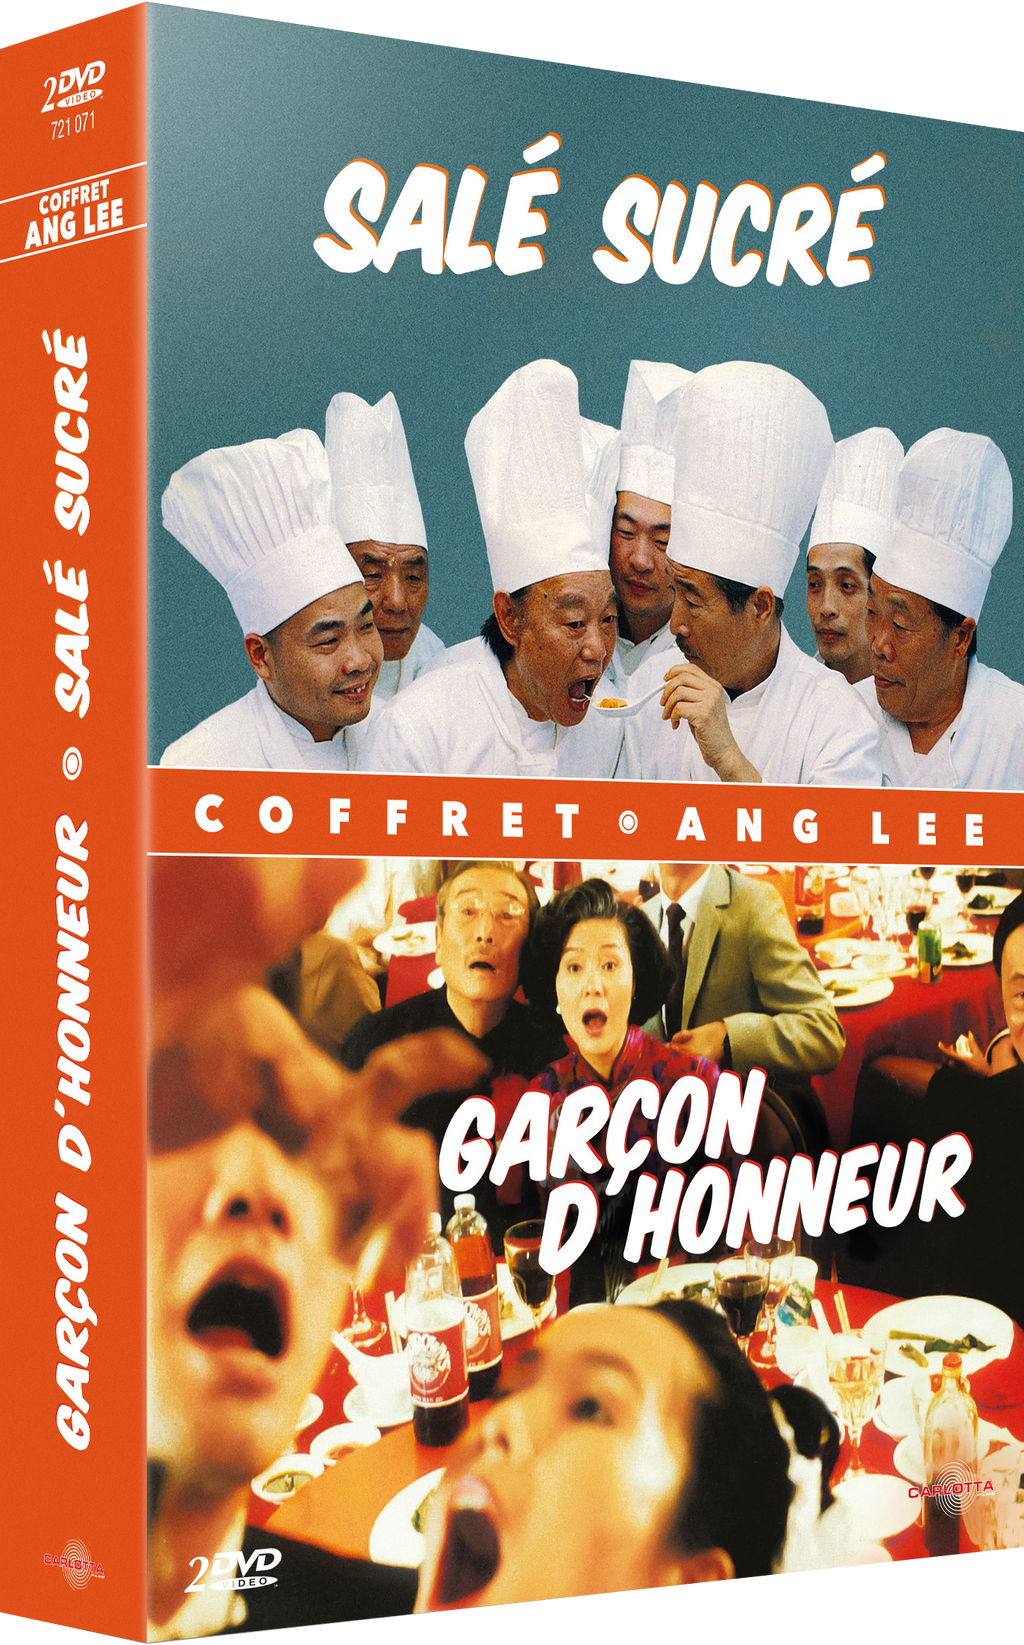 Coffret Ang Lee - DVD - Carlotta Films - La Boutique